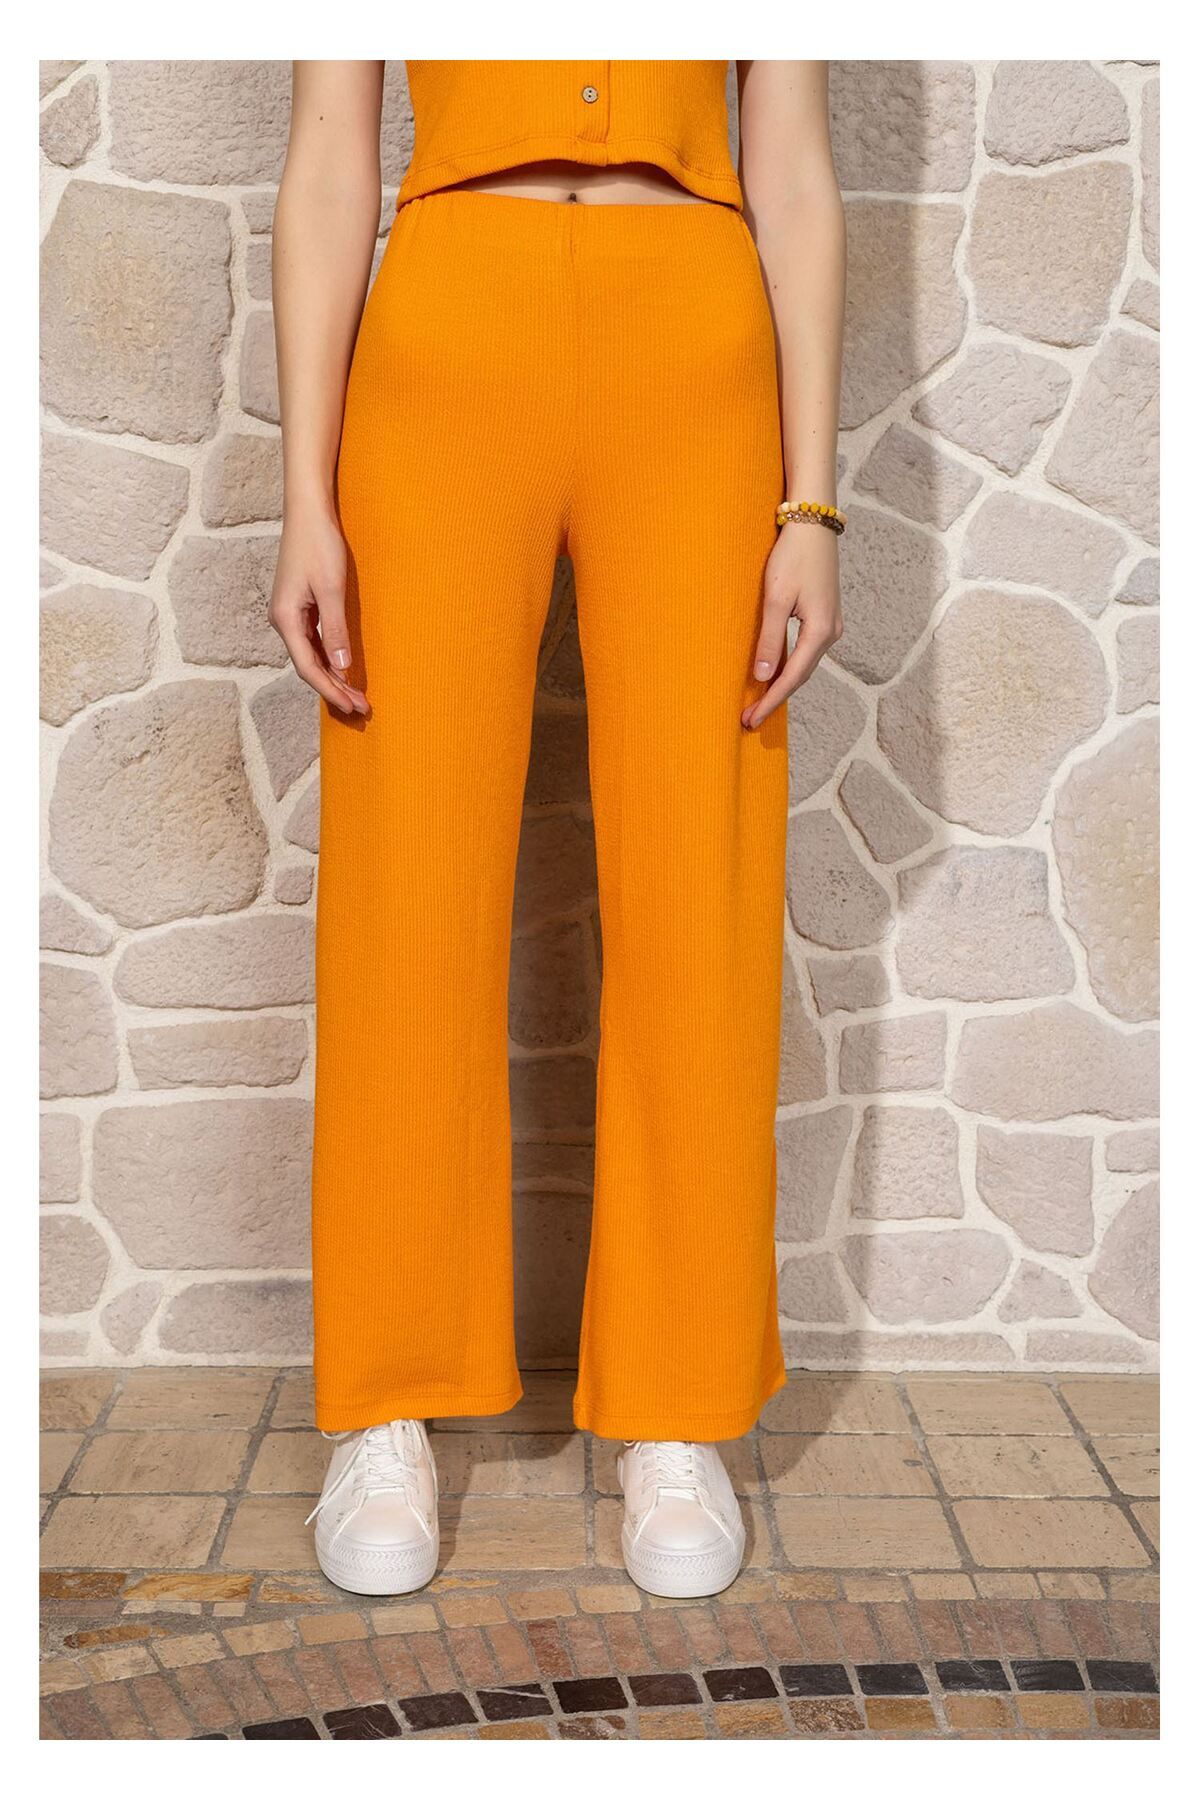 Tiffany Tomato Beli Lastikli Örme Pantolon-turuncu